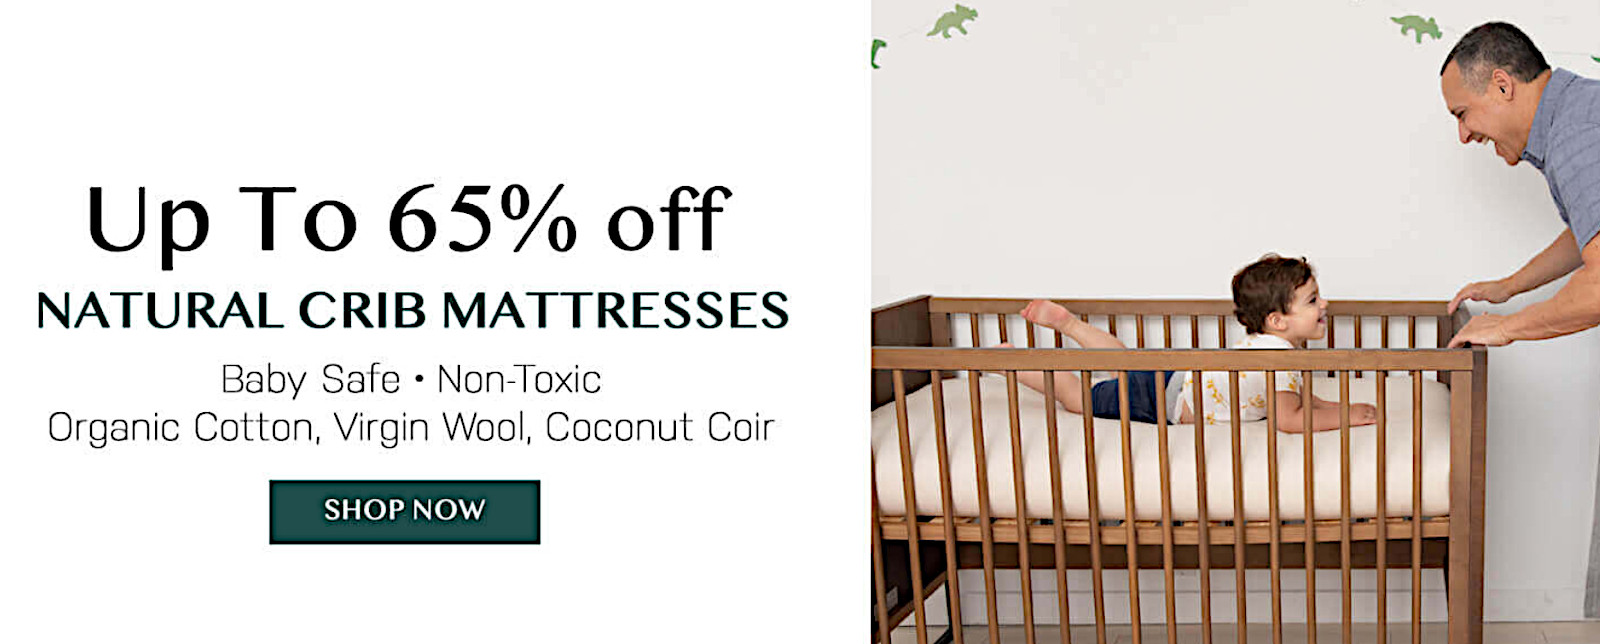 natural crib mattresses at a discount